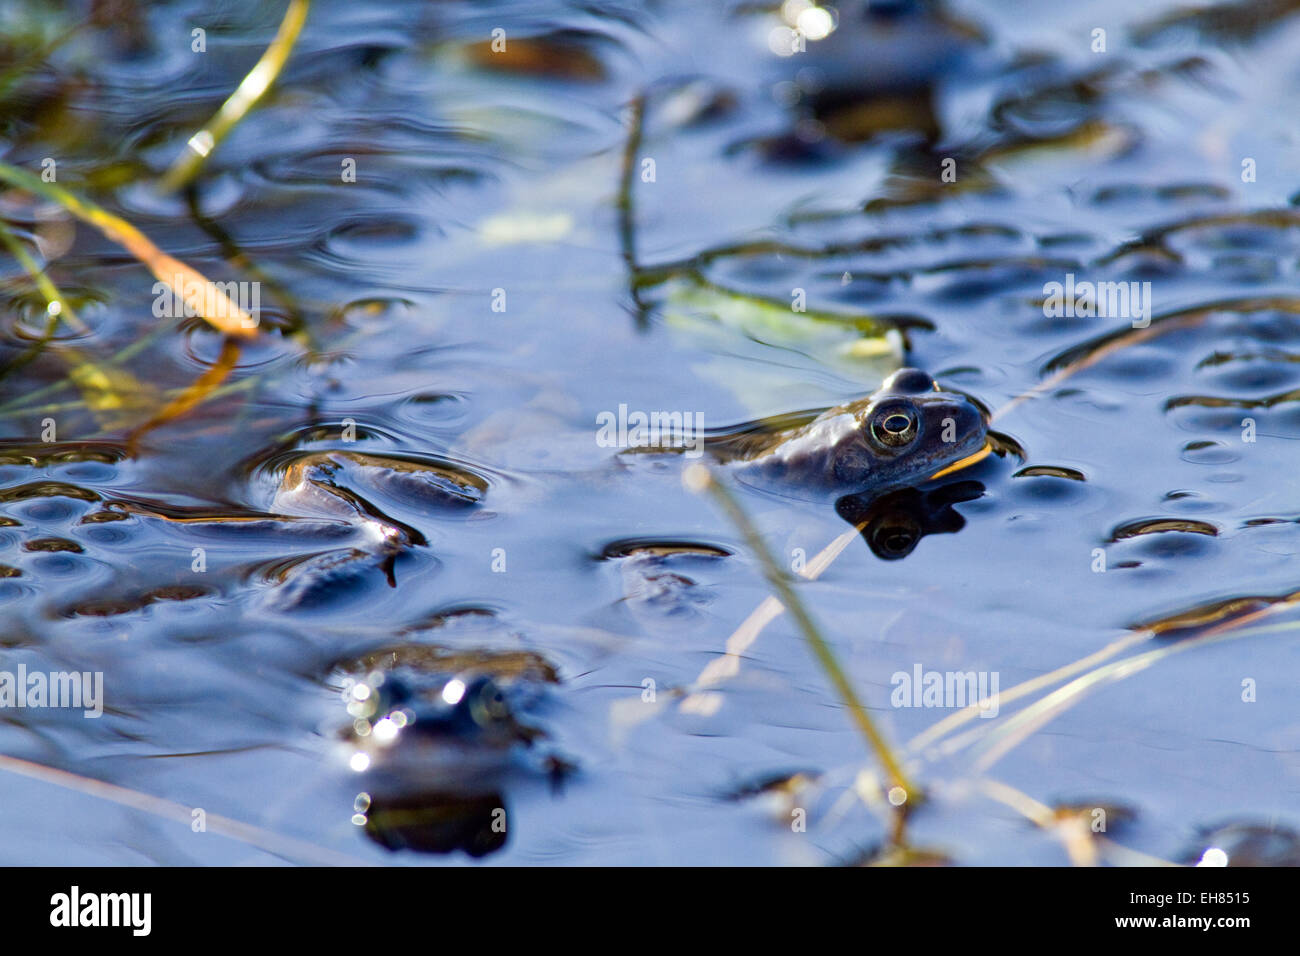 Common Frogs in breeding pool Stock Photo